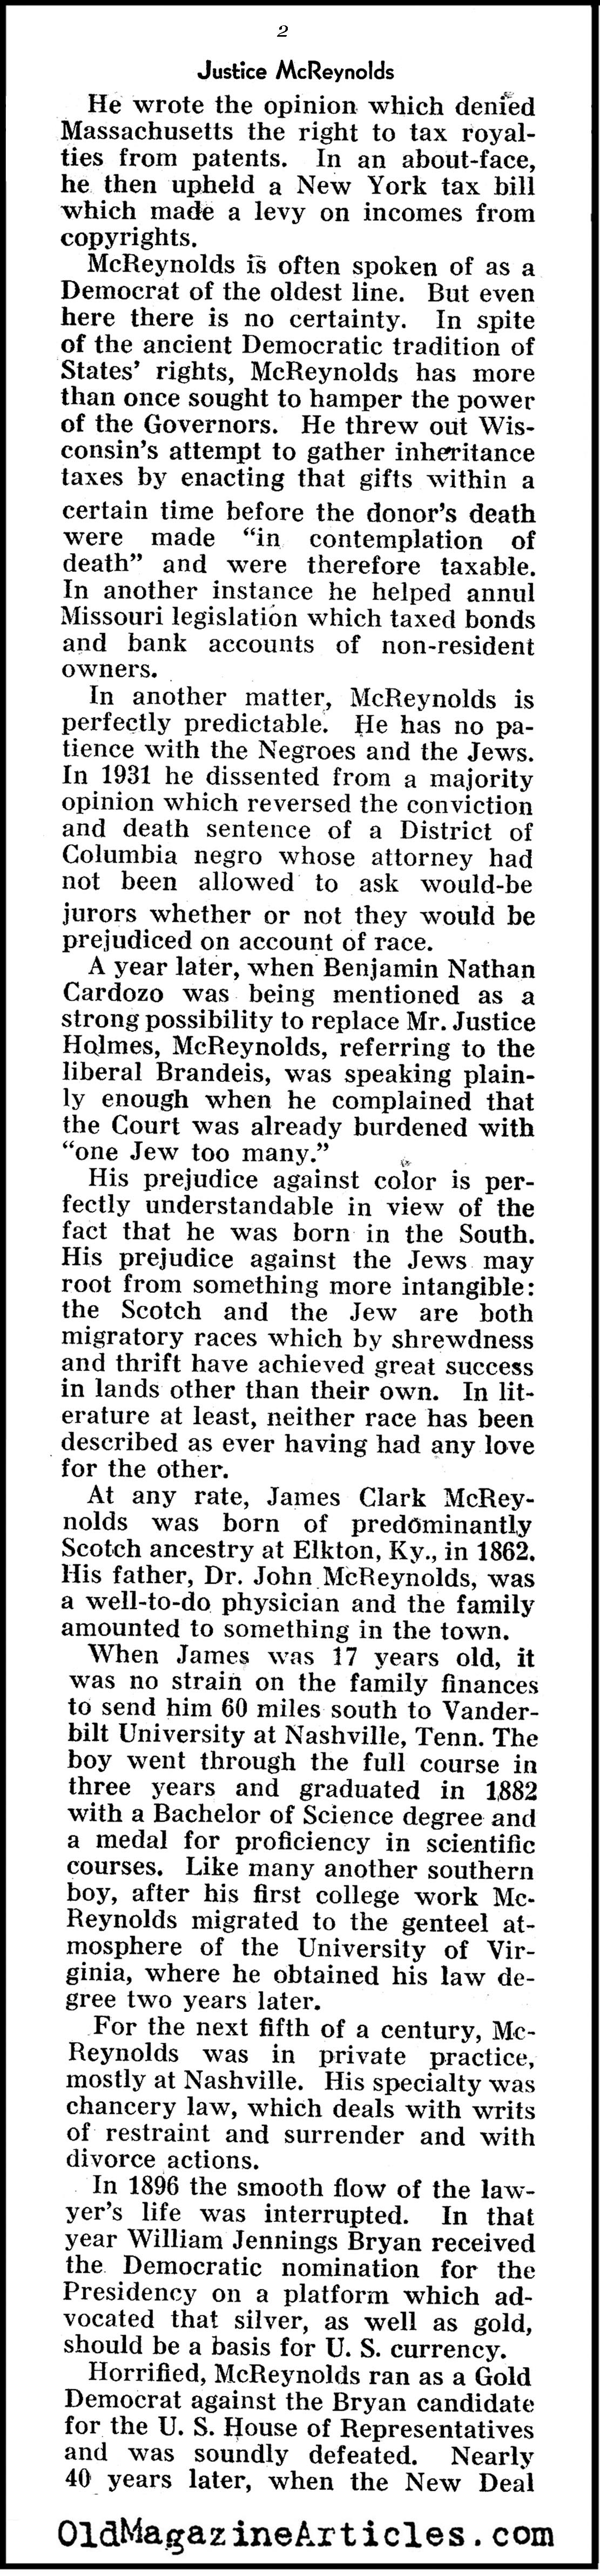 Justice McReynolds (Pathfinder Magazine, 1937)